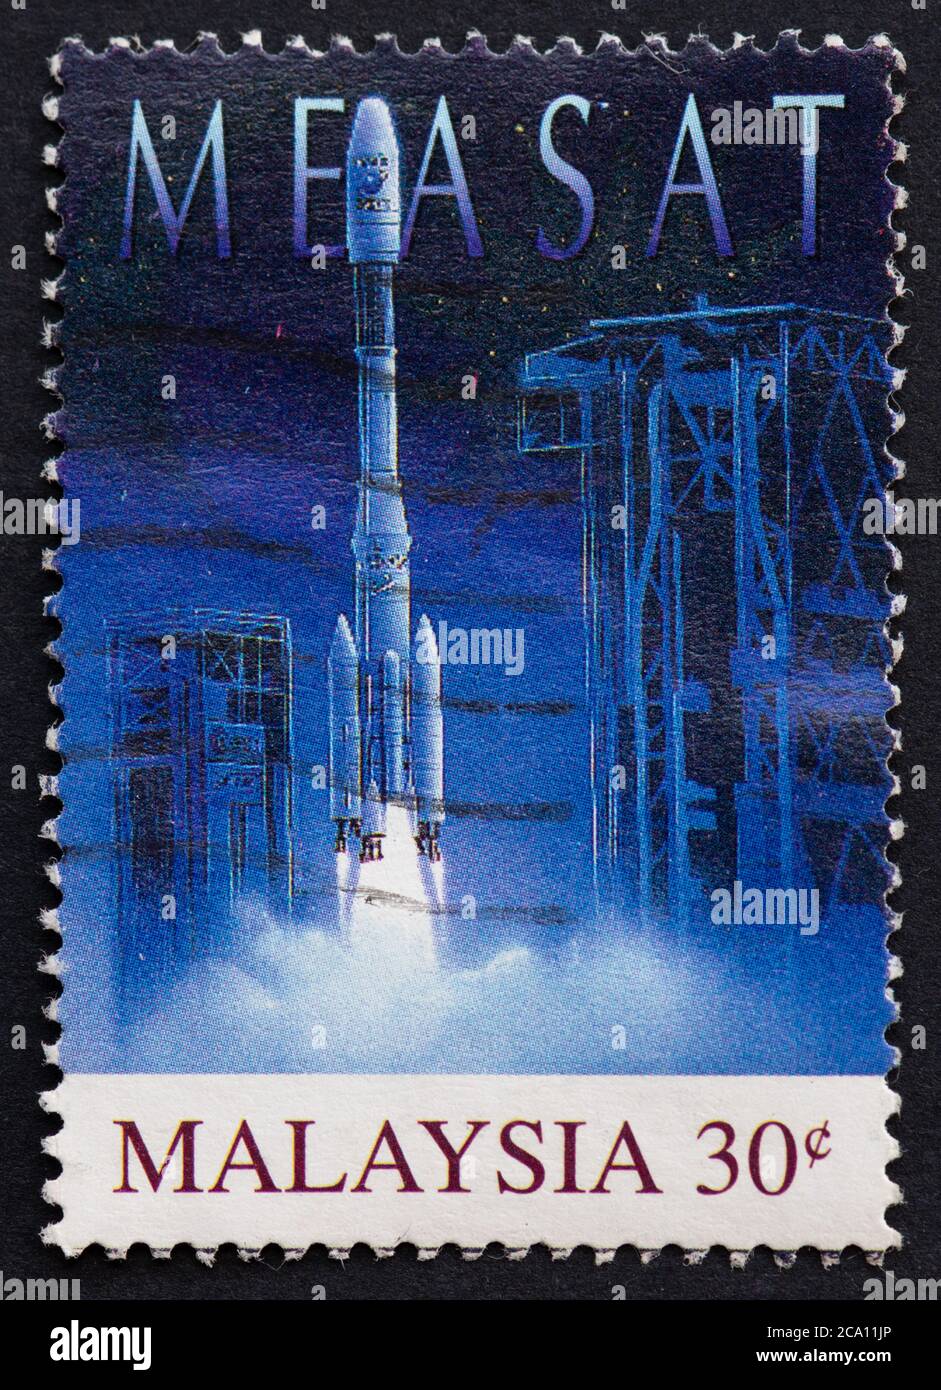 MEASAT - Malaysia East Asia Satellite - 30 c postage stamp - Malaysia 1996 Stock Photo